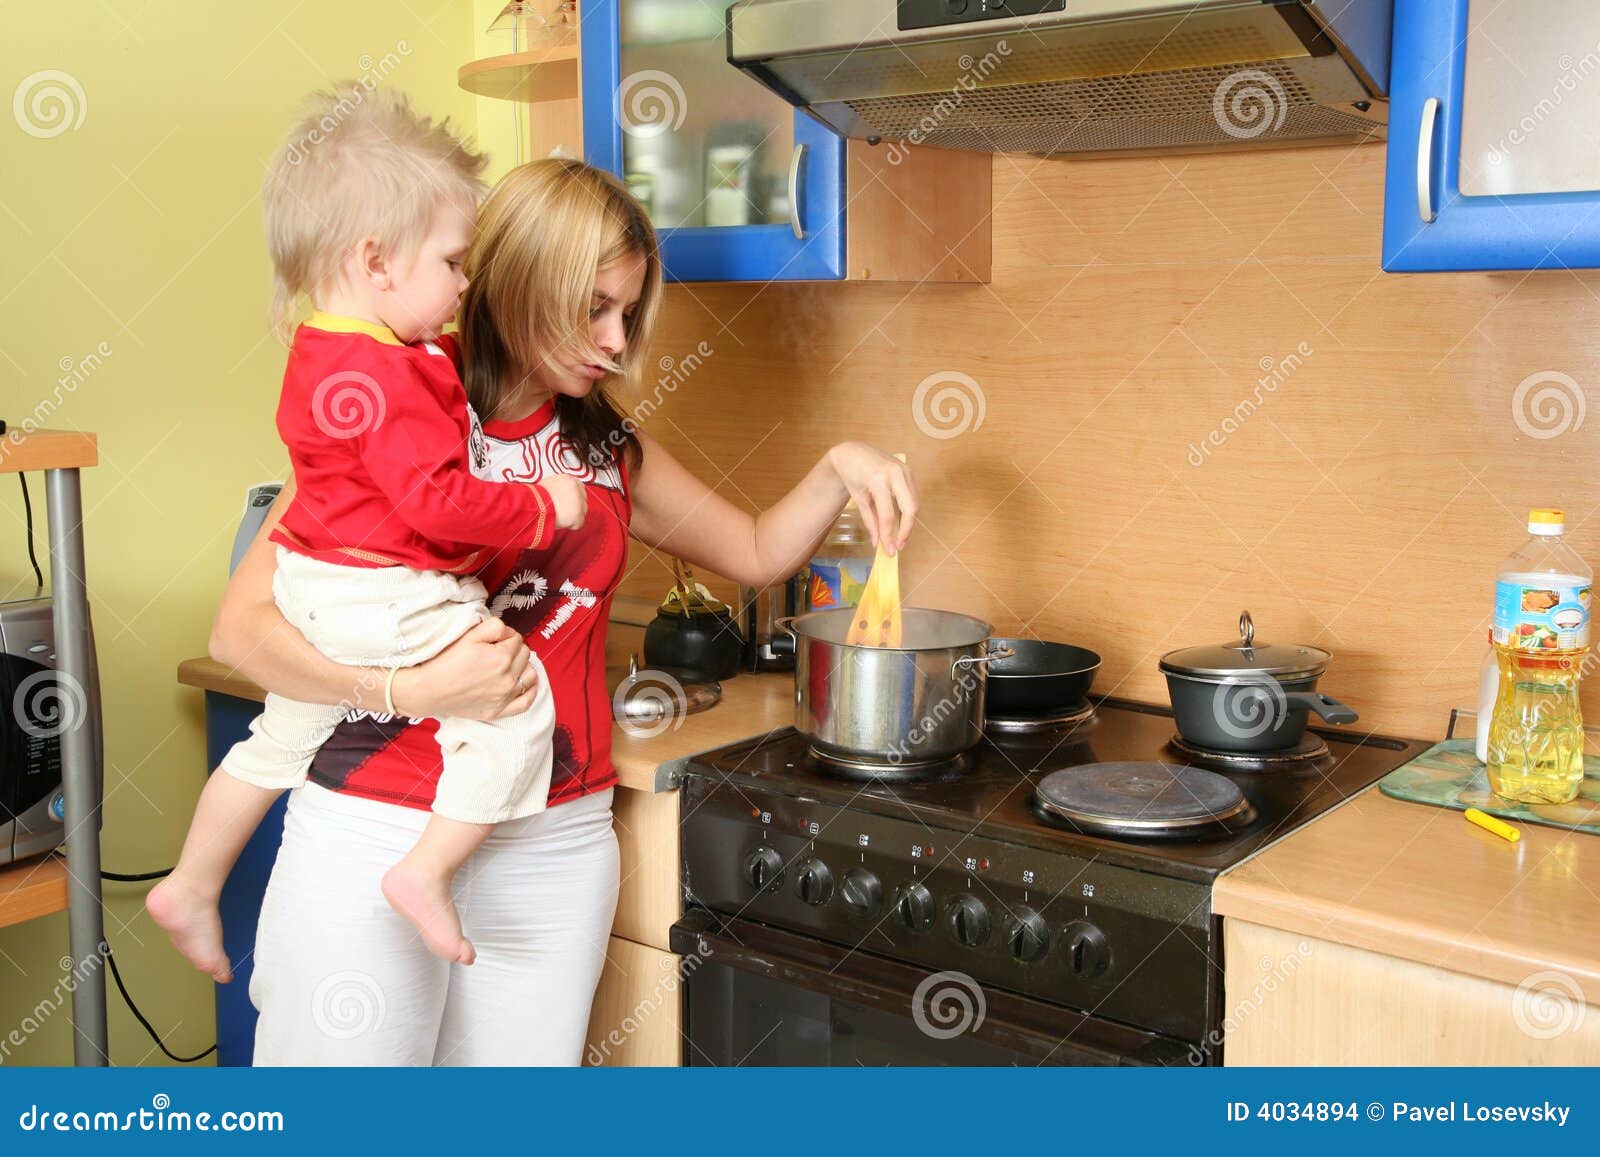 Маму стоя на кухне. Кухня для детей. Мама с ребенком на кухне. Фотосессия мама и дети на кухне. Женщина с ребенком на кухне.